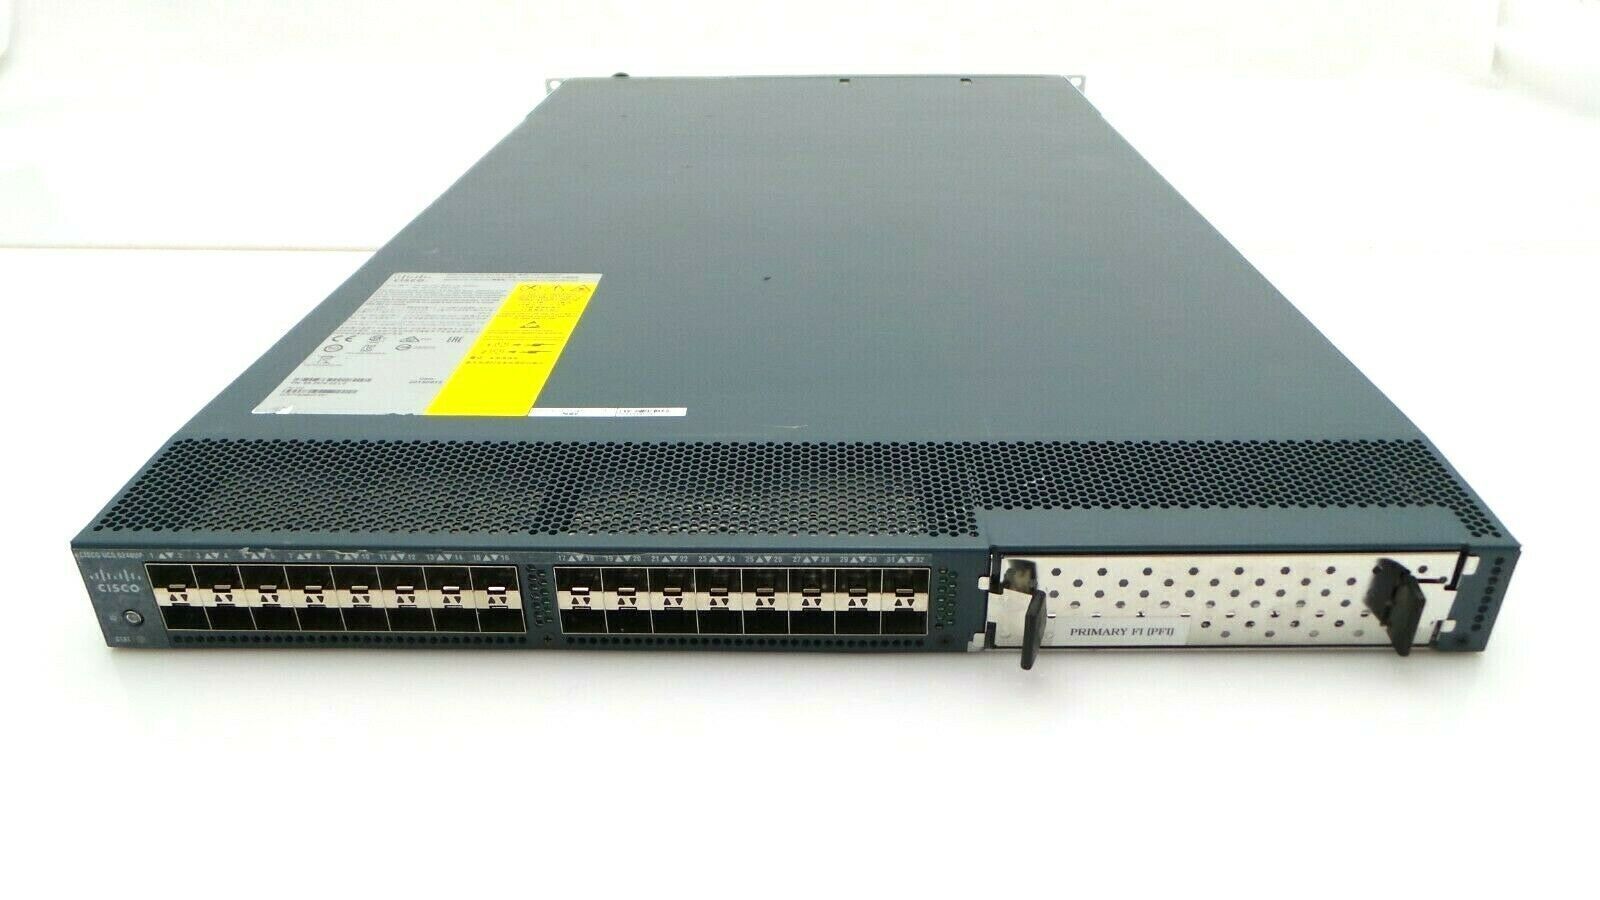 Cisco UCS-FI-6248UP UCS 6248UP 48 port Fabric Interconnect 1RU Switch w/ 2x PSU